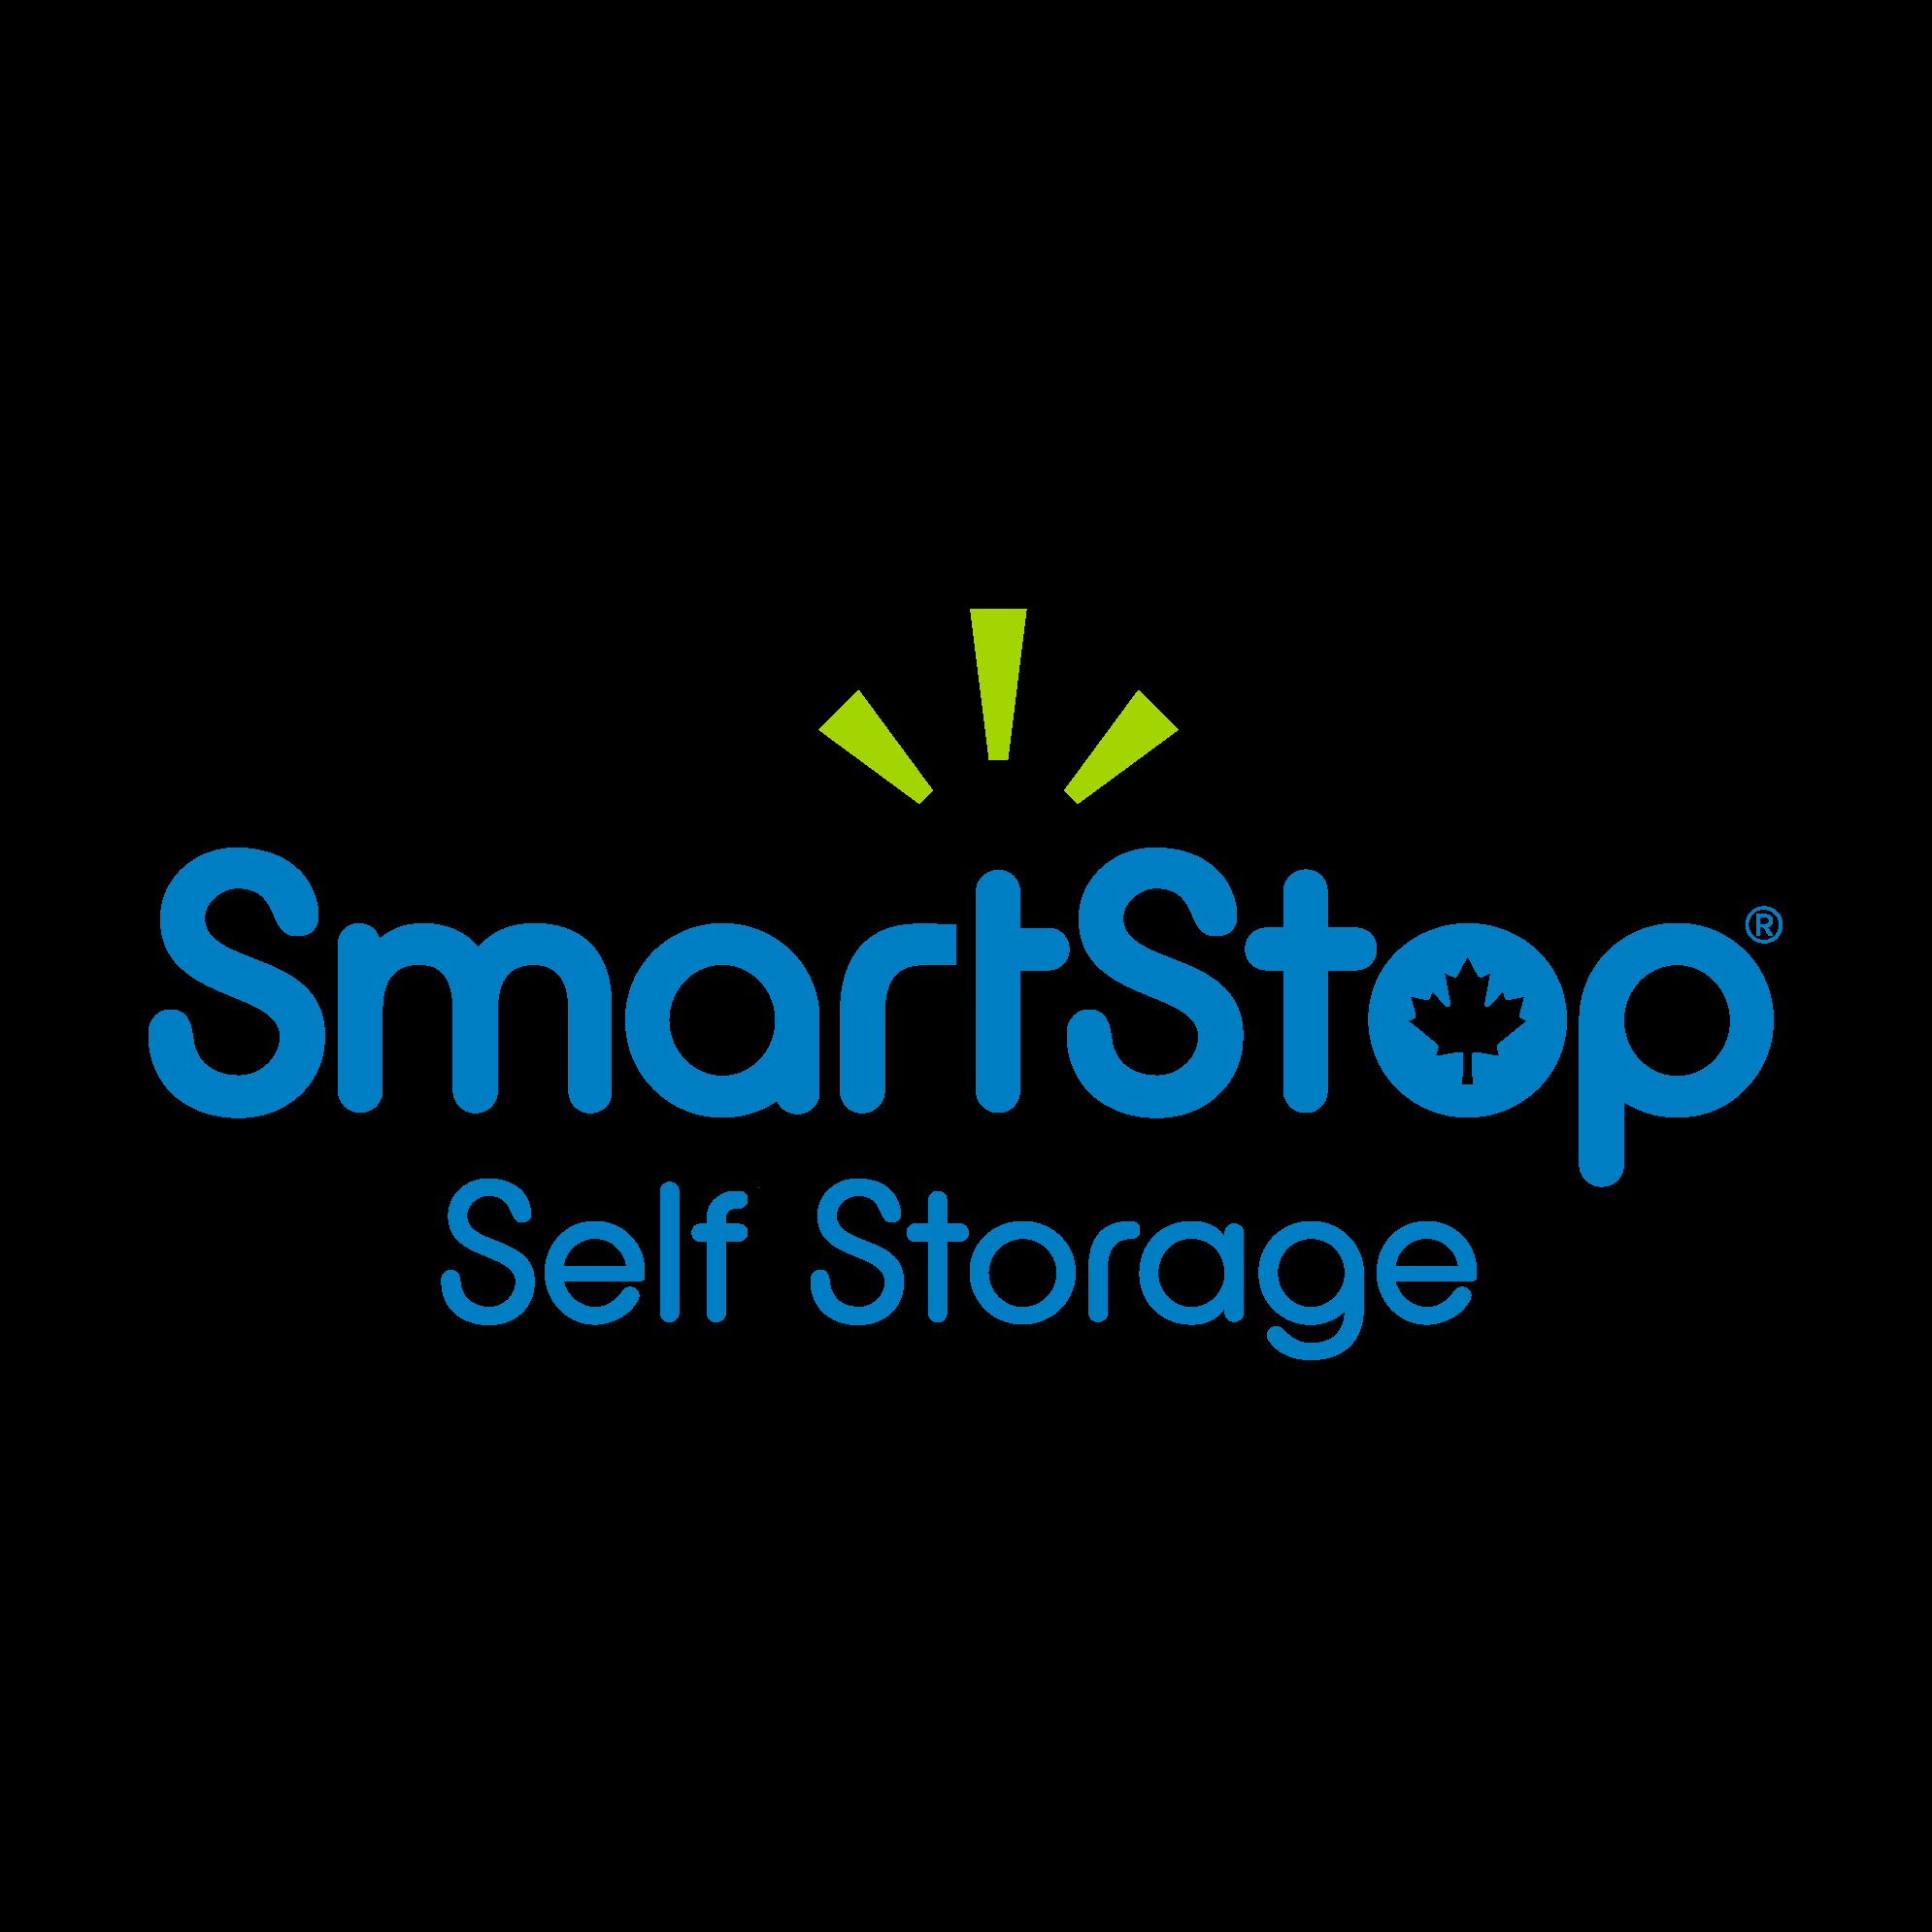 SmartStop Self Storage - East York - Self-Storage